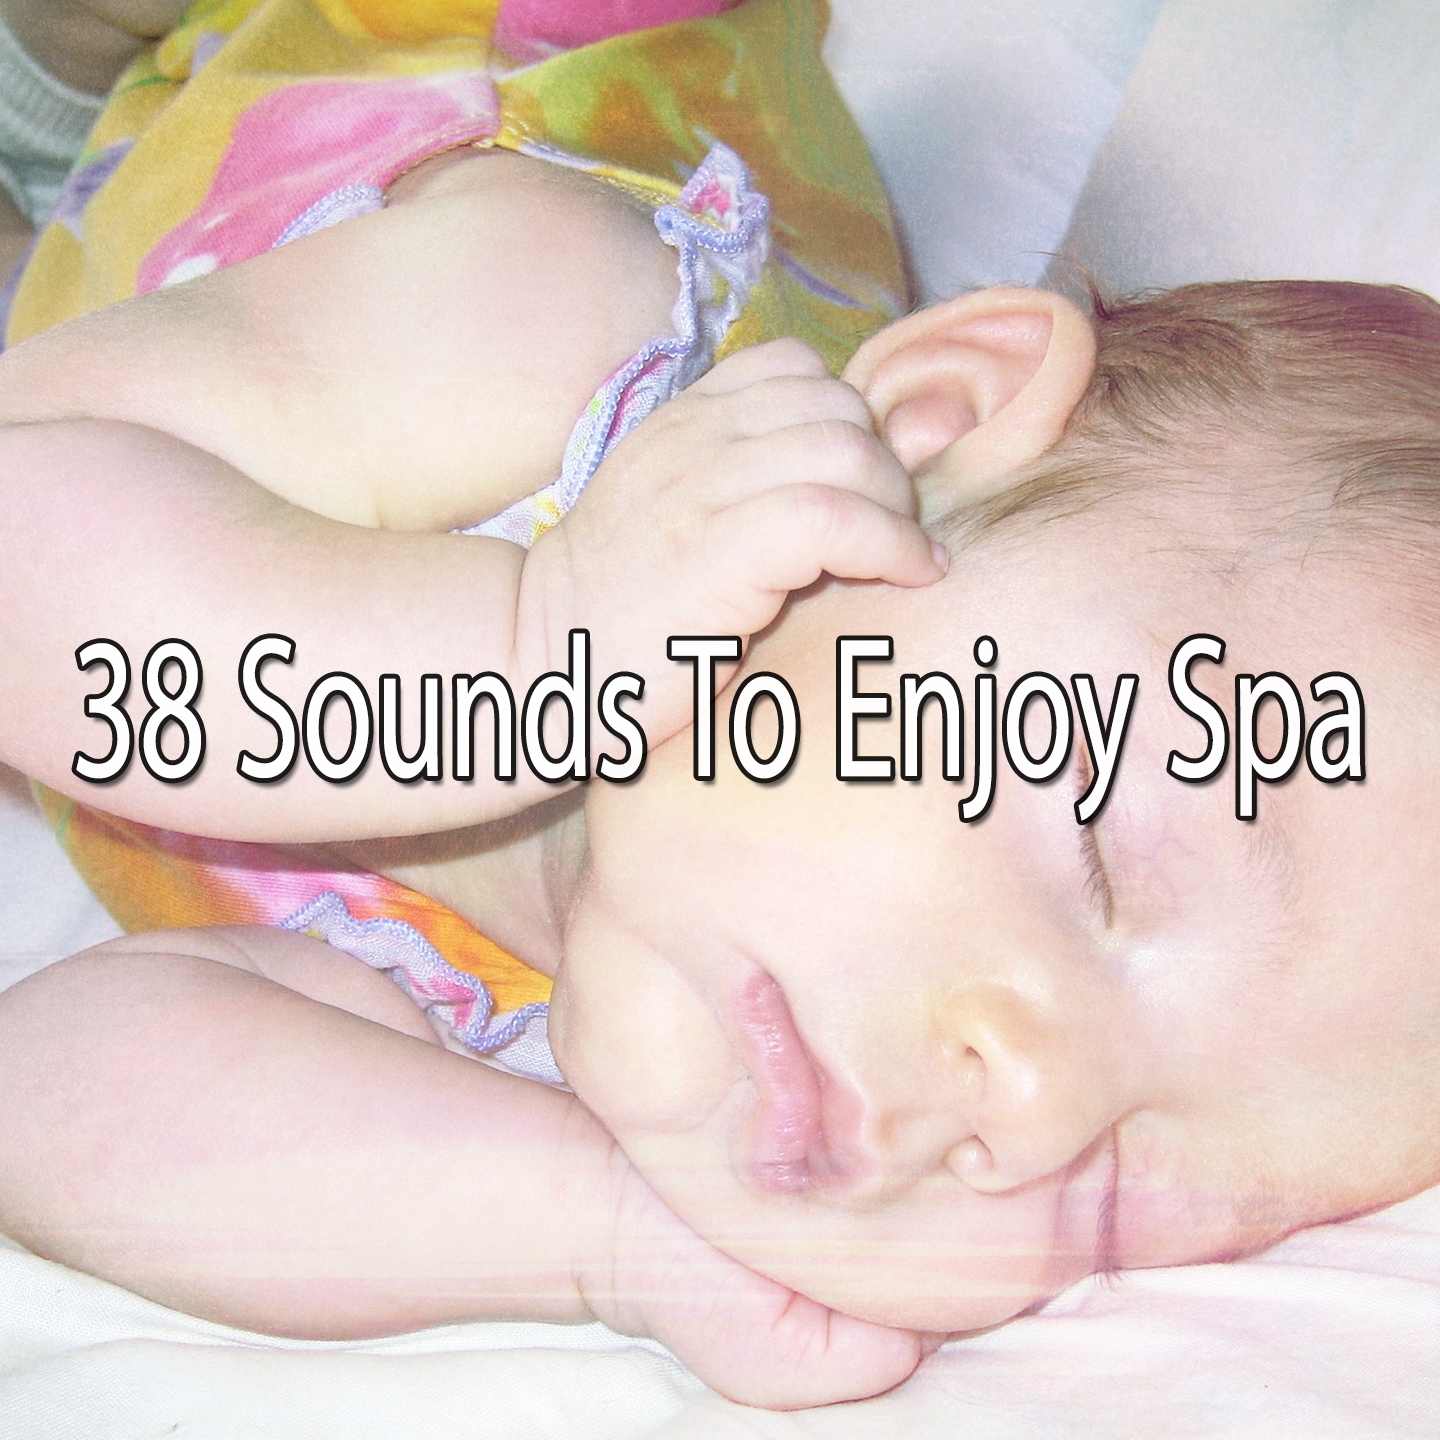 38 Sounds To Enjoy Spa